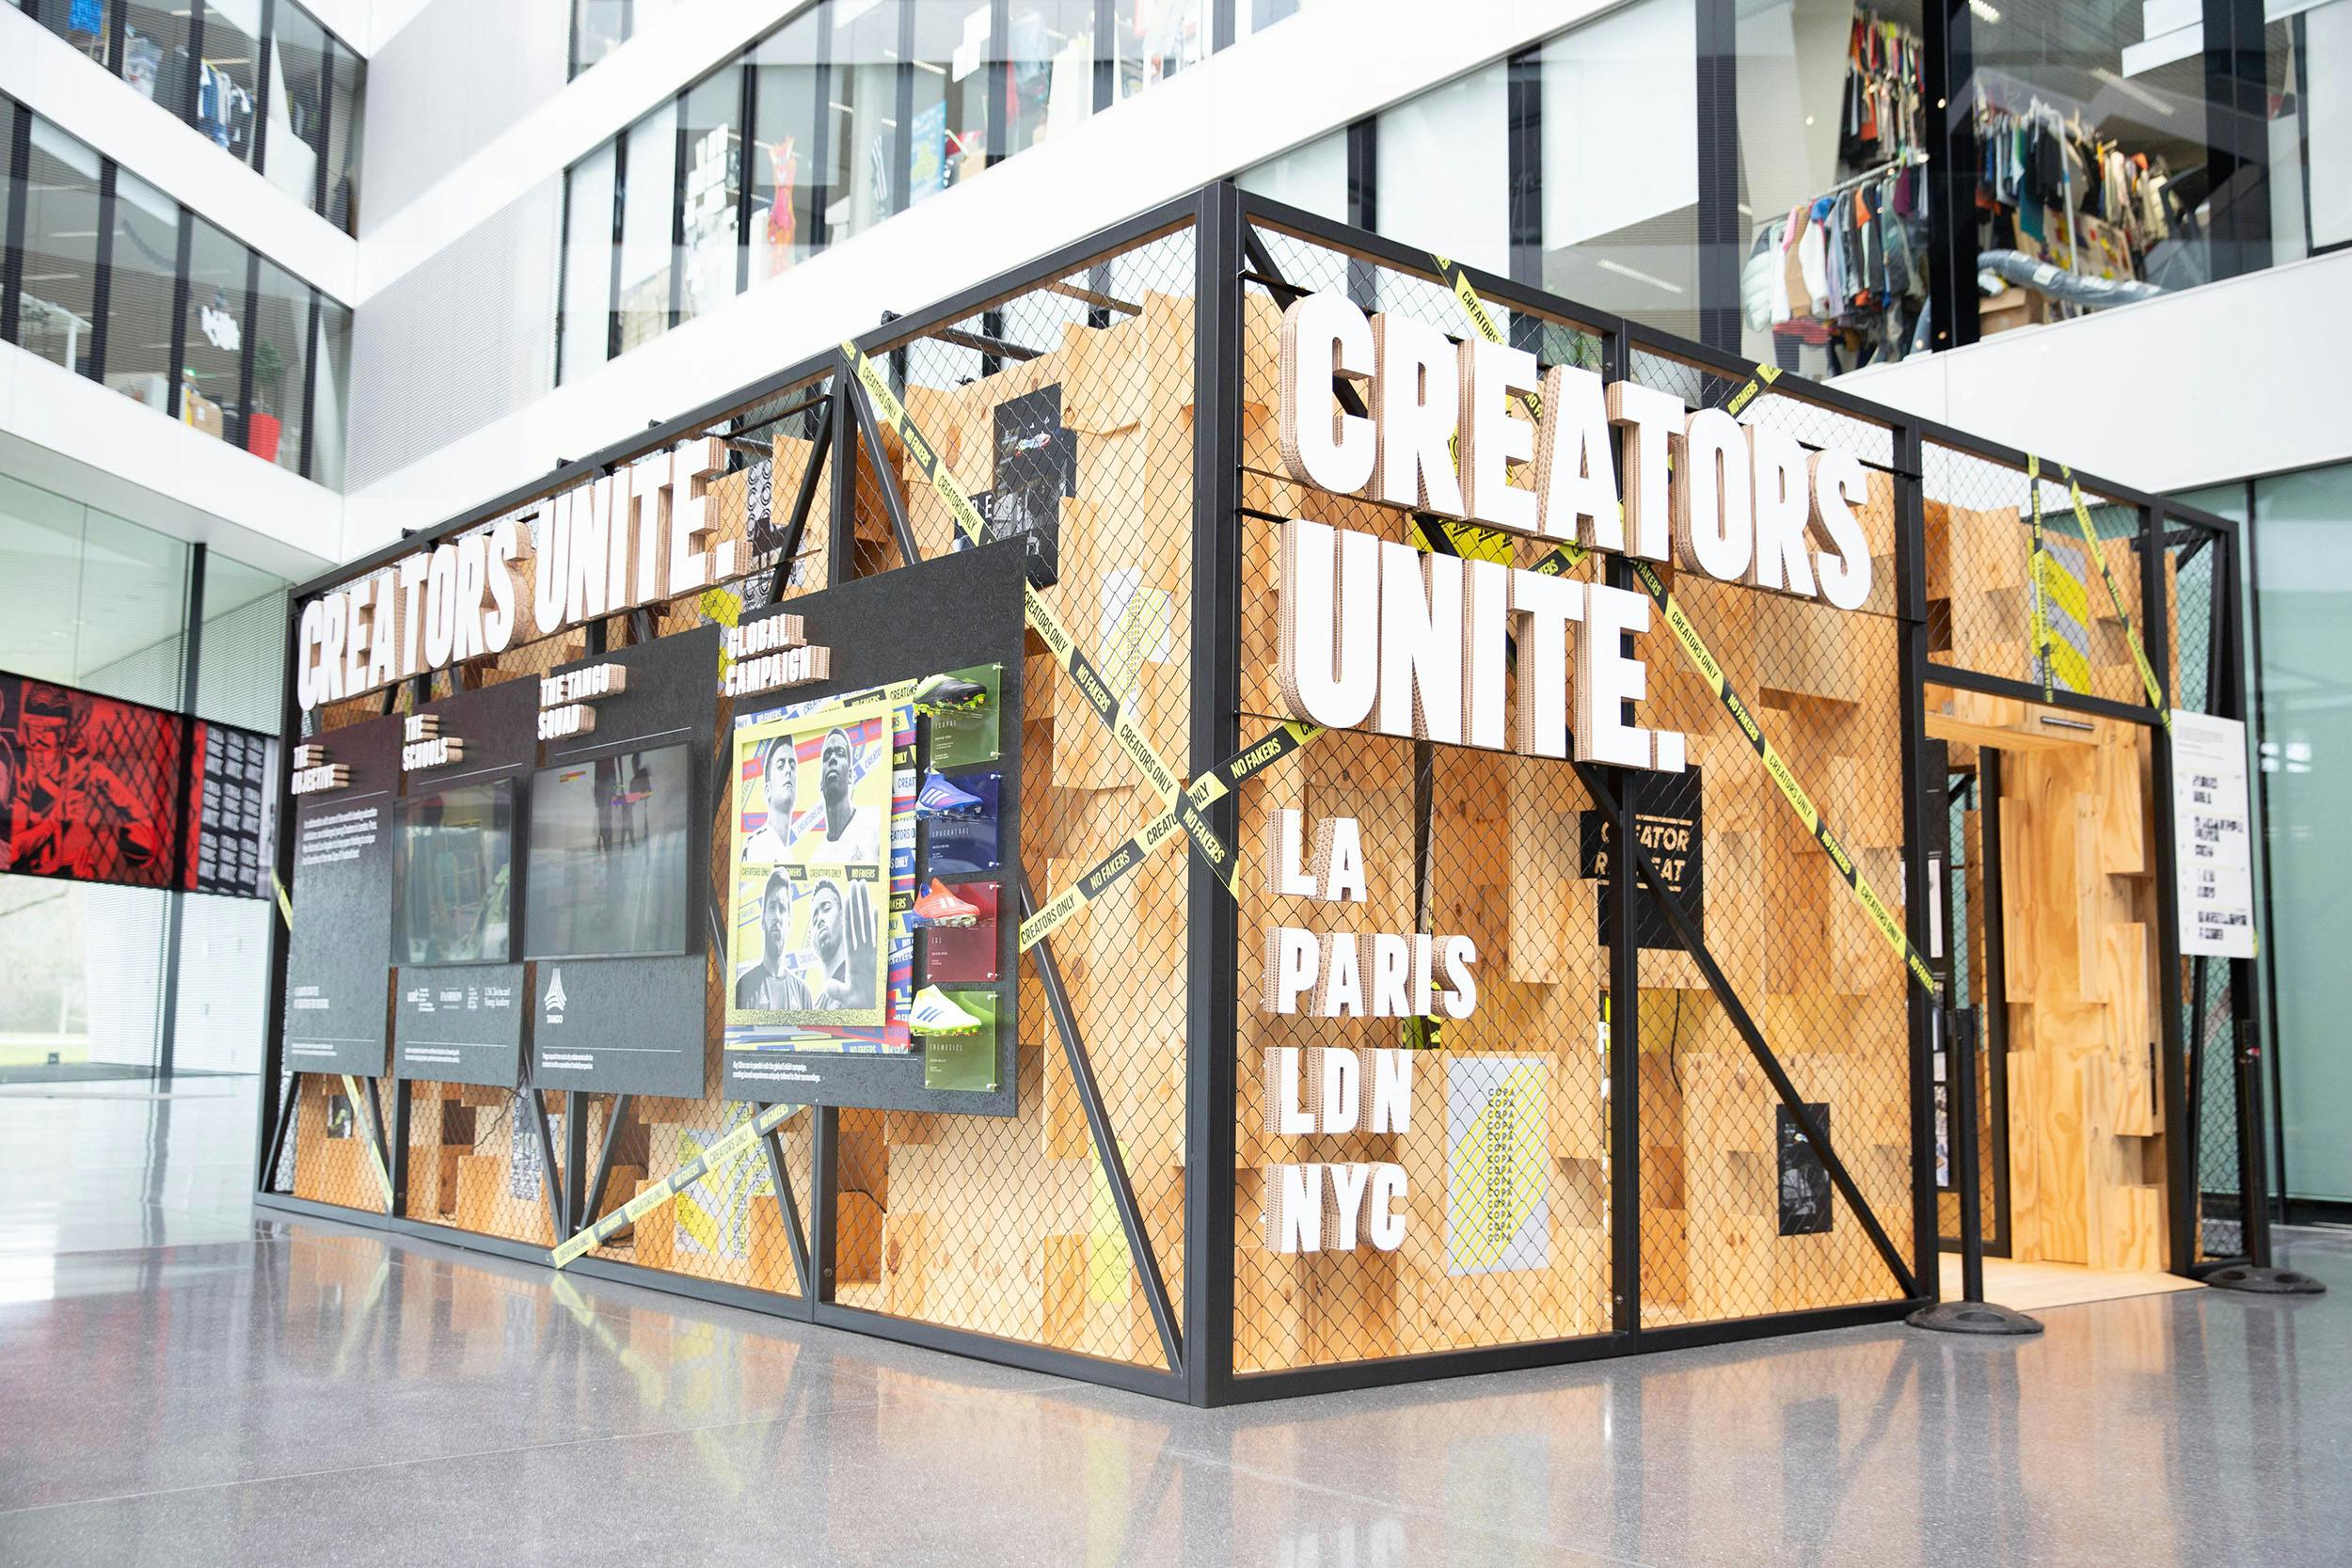 Large indoor installation with sign Creators Unite